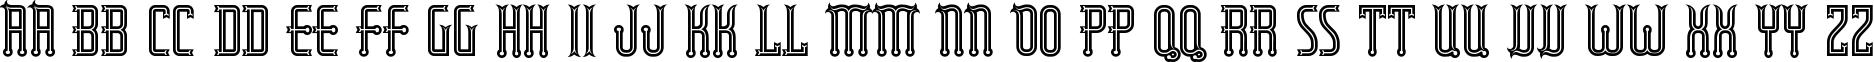 Пример написания английского алфавита шрифтом RubaiyatEngraved